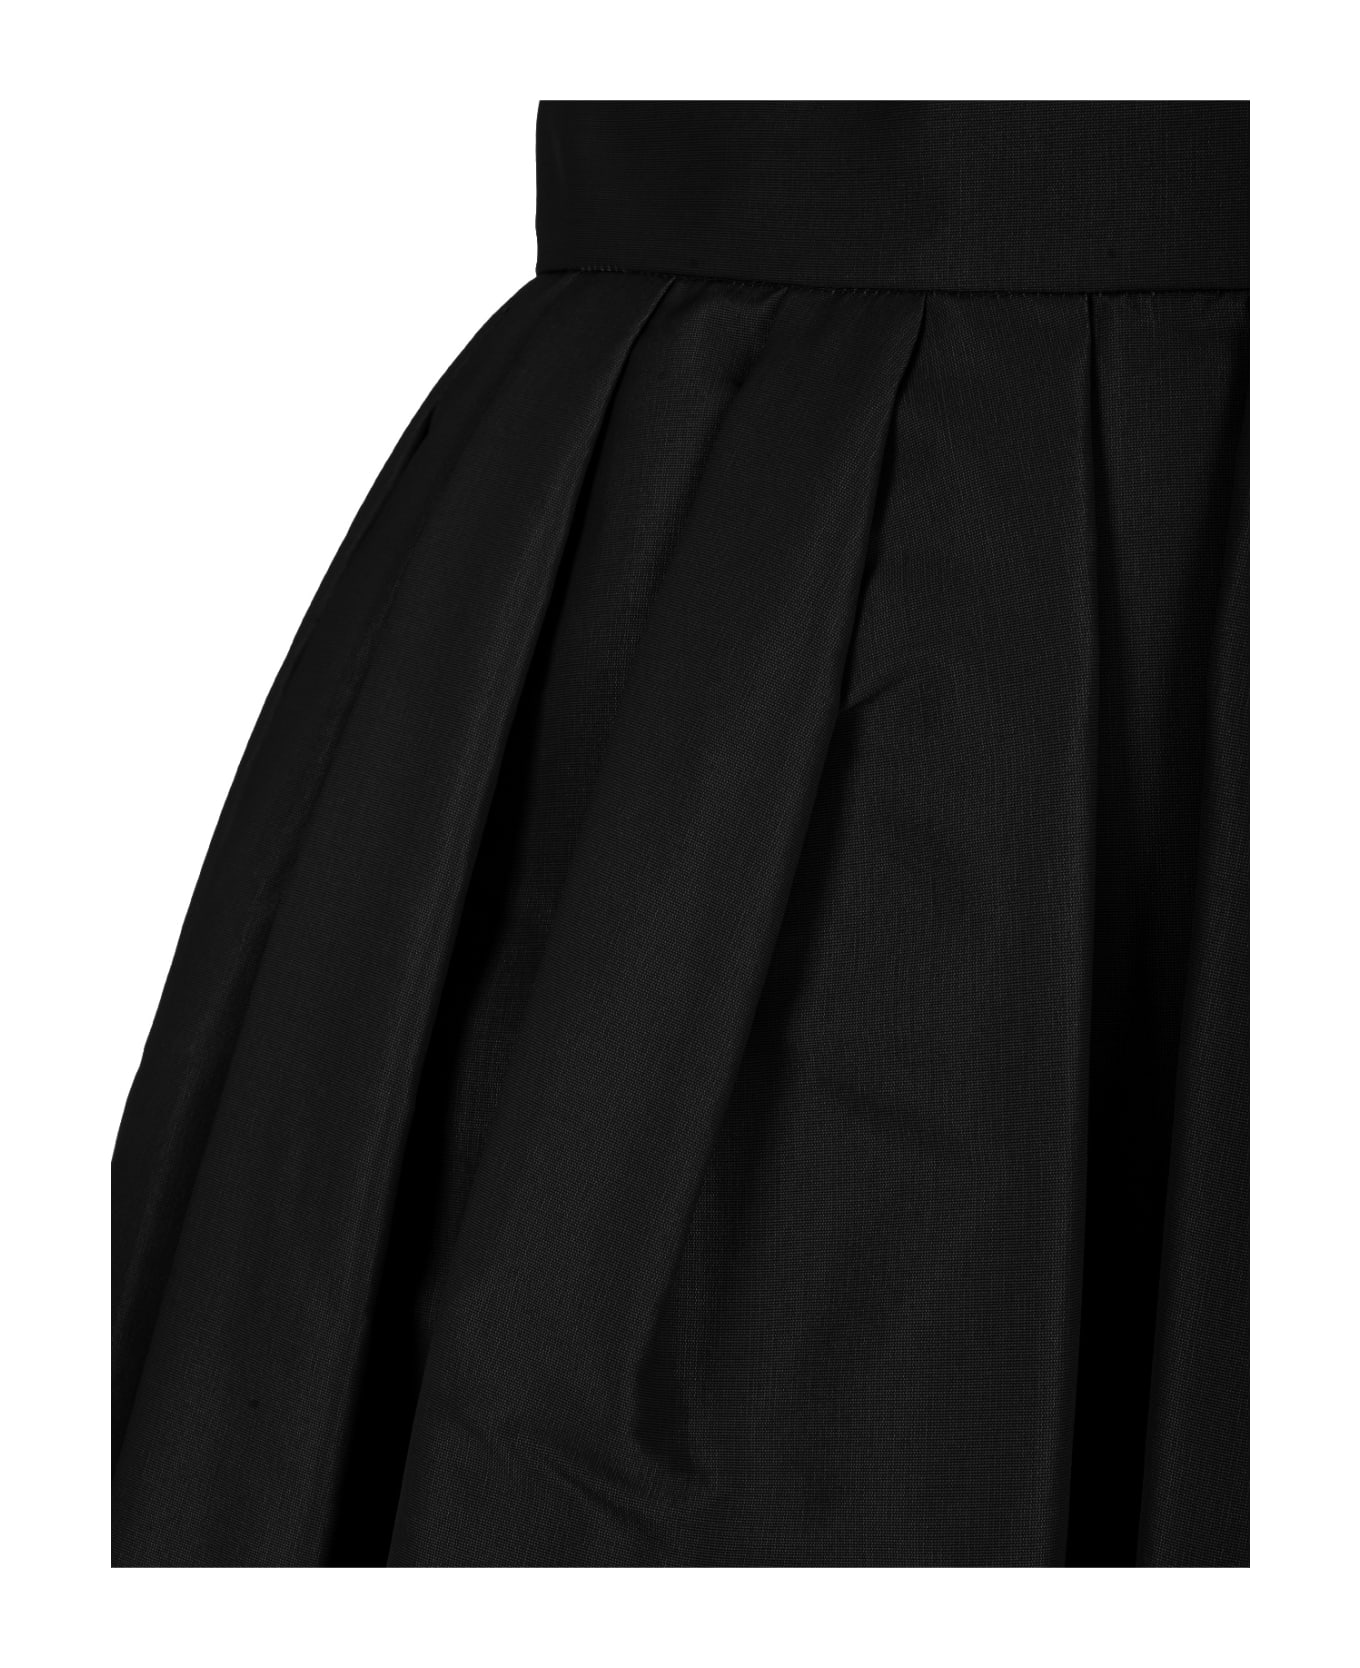 Alexander McQueen Black Curled Midi Skirt - Black